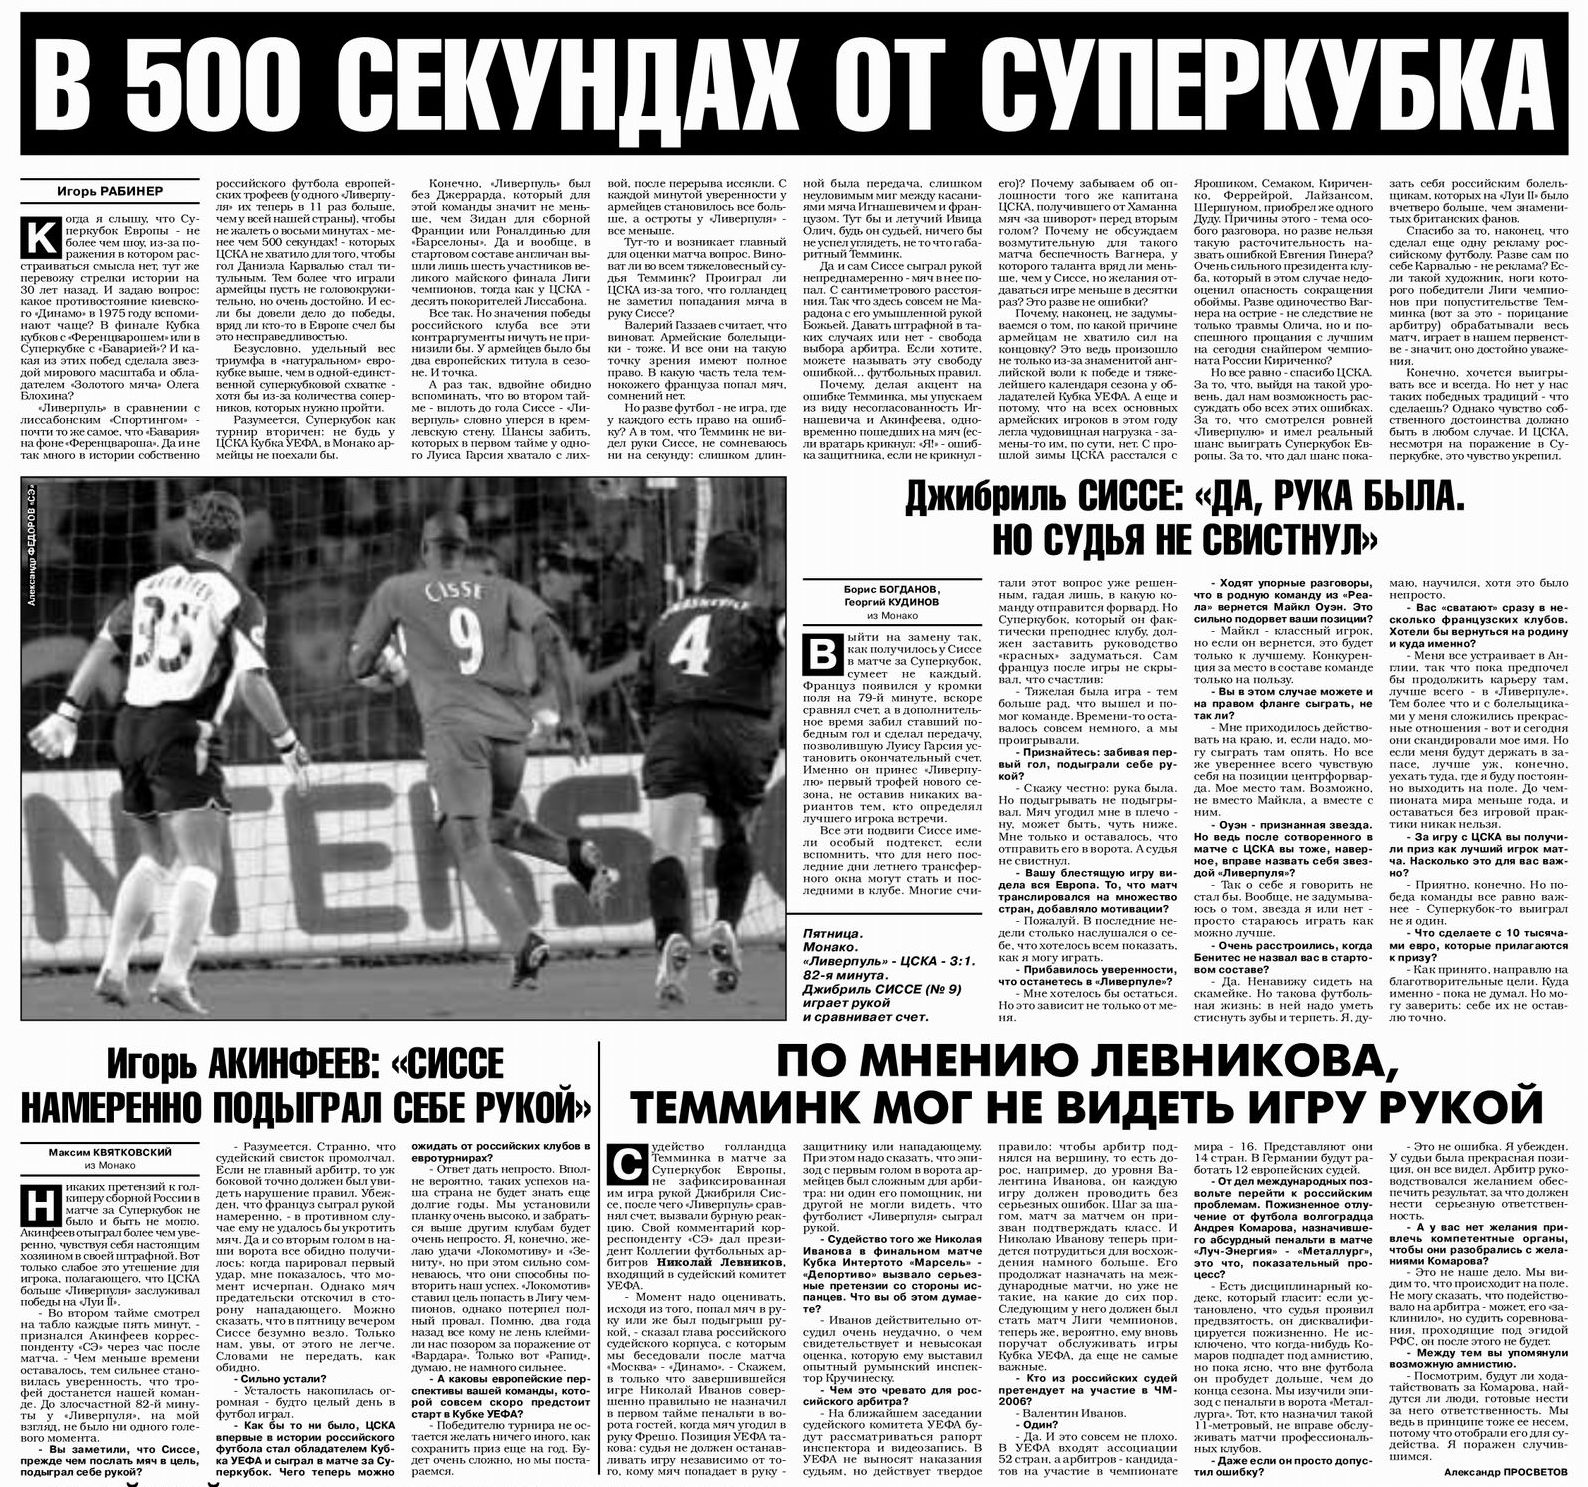 2005-08-26.Liverpool-CSKA.6